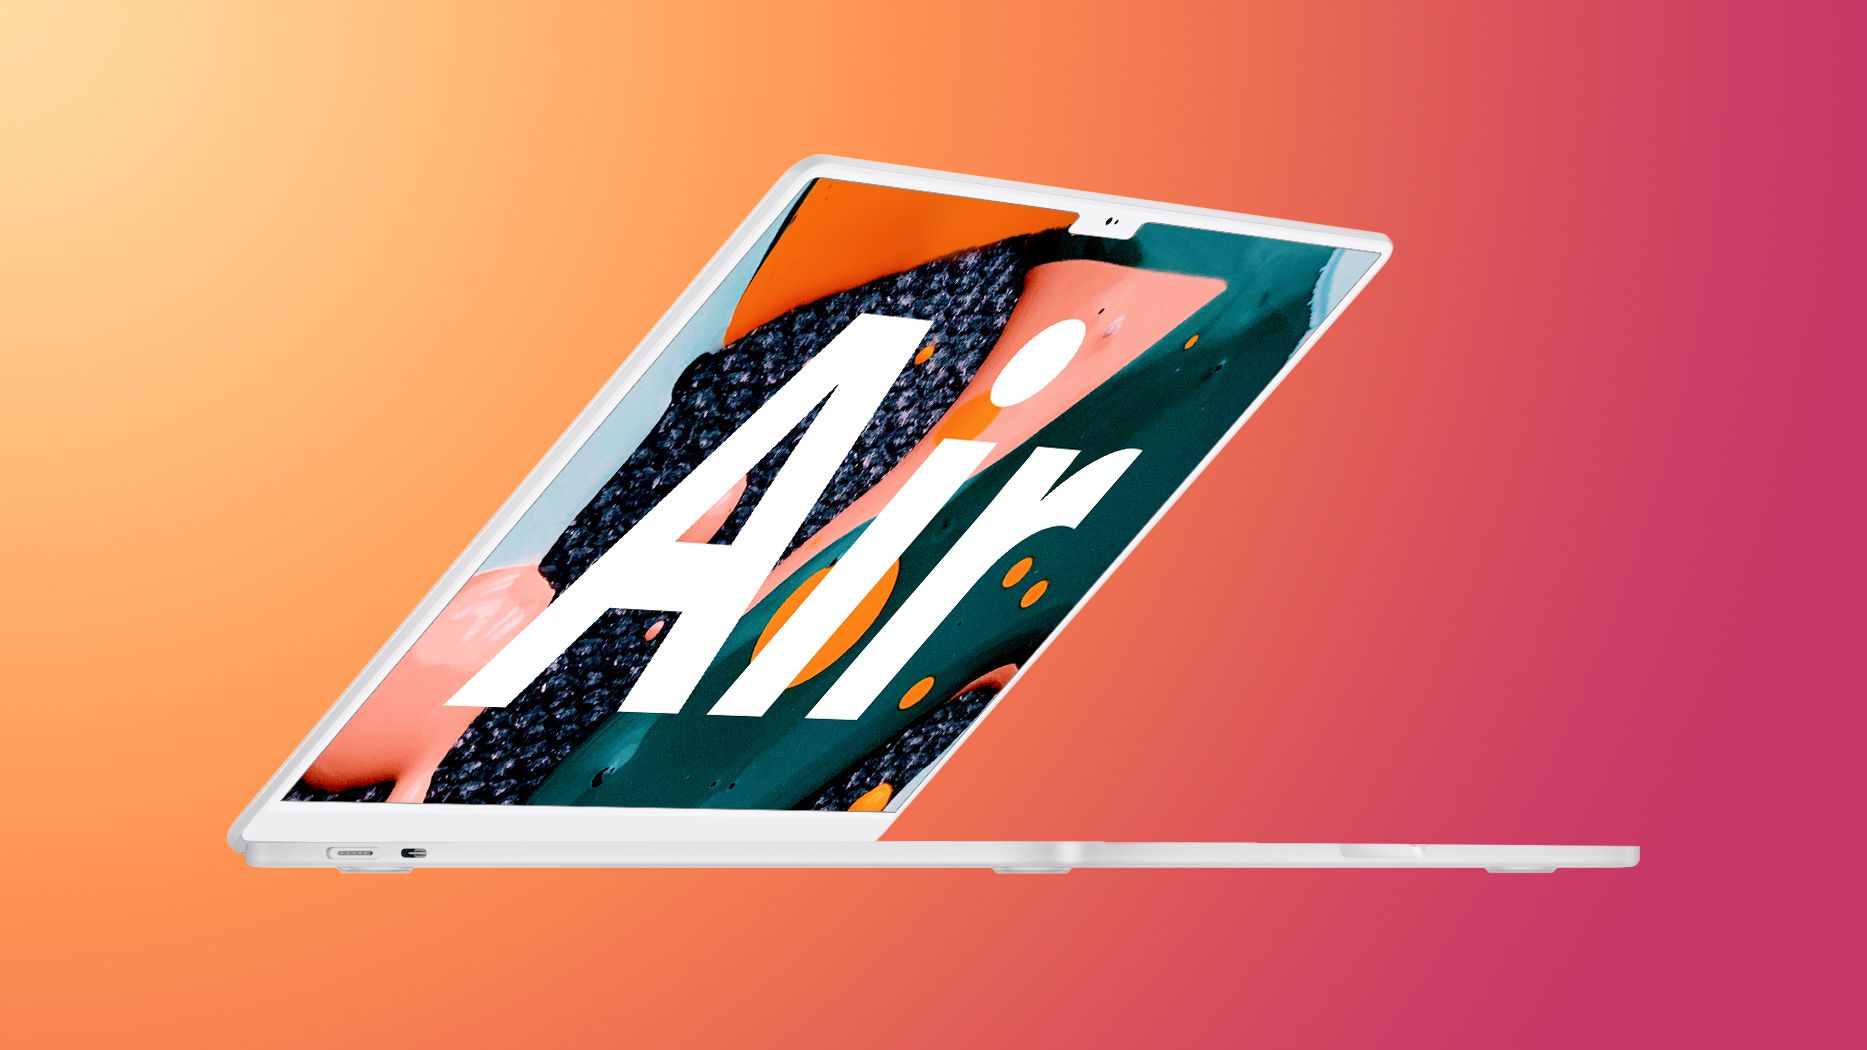 Kuo: M1 칩, 더 많은 색상 옵션 및 완전히 새로운 디자인을 특징으로 하는 2022 MacBook Air